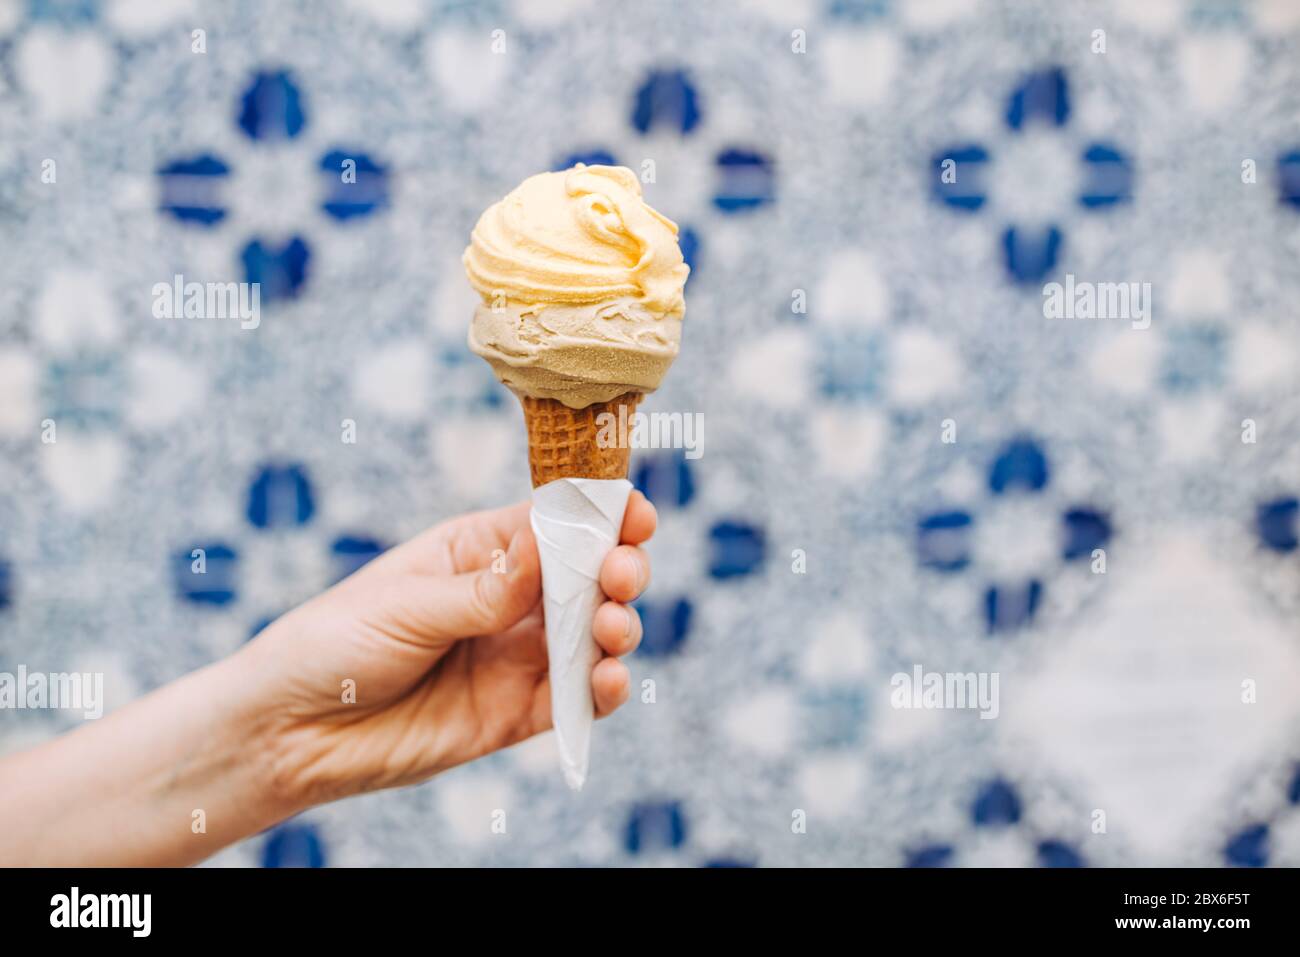 Female hand holding ice cream cone on blurred white blue background Stock Photo